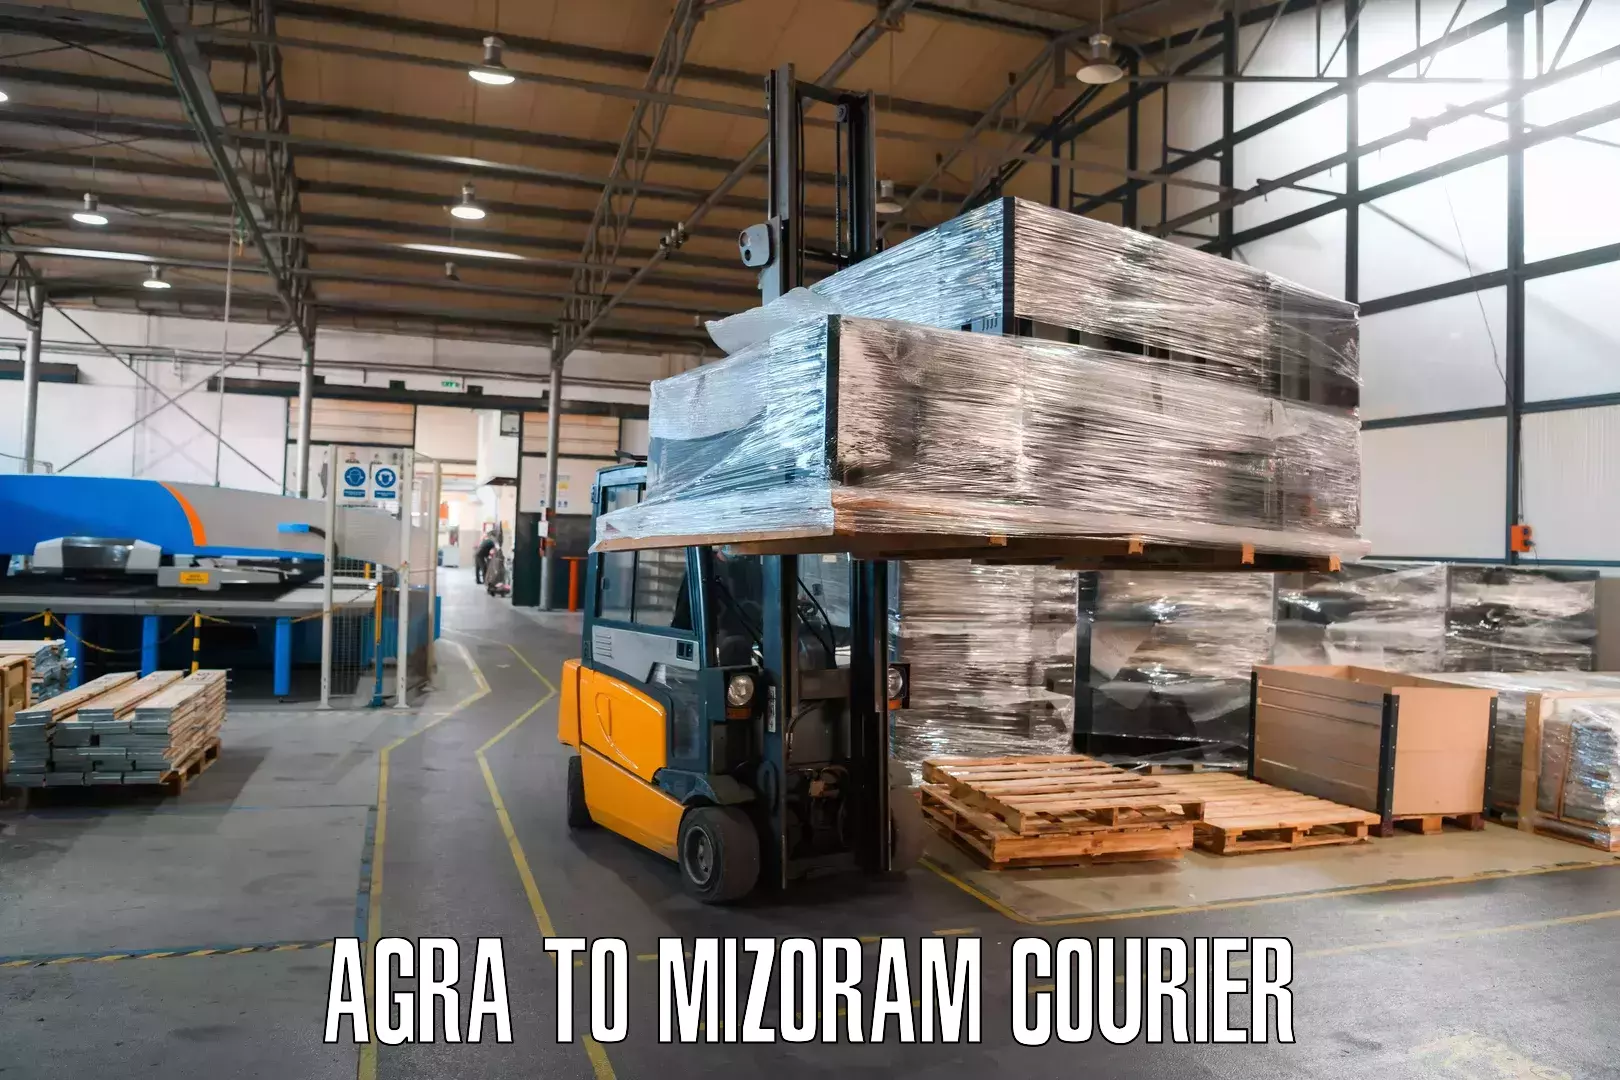 Courier service innovation Agra to Mizoram